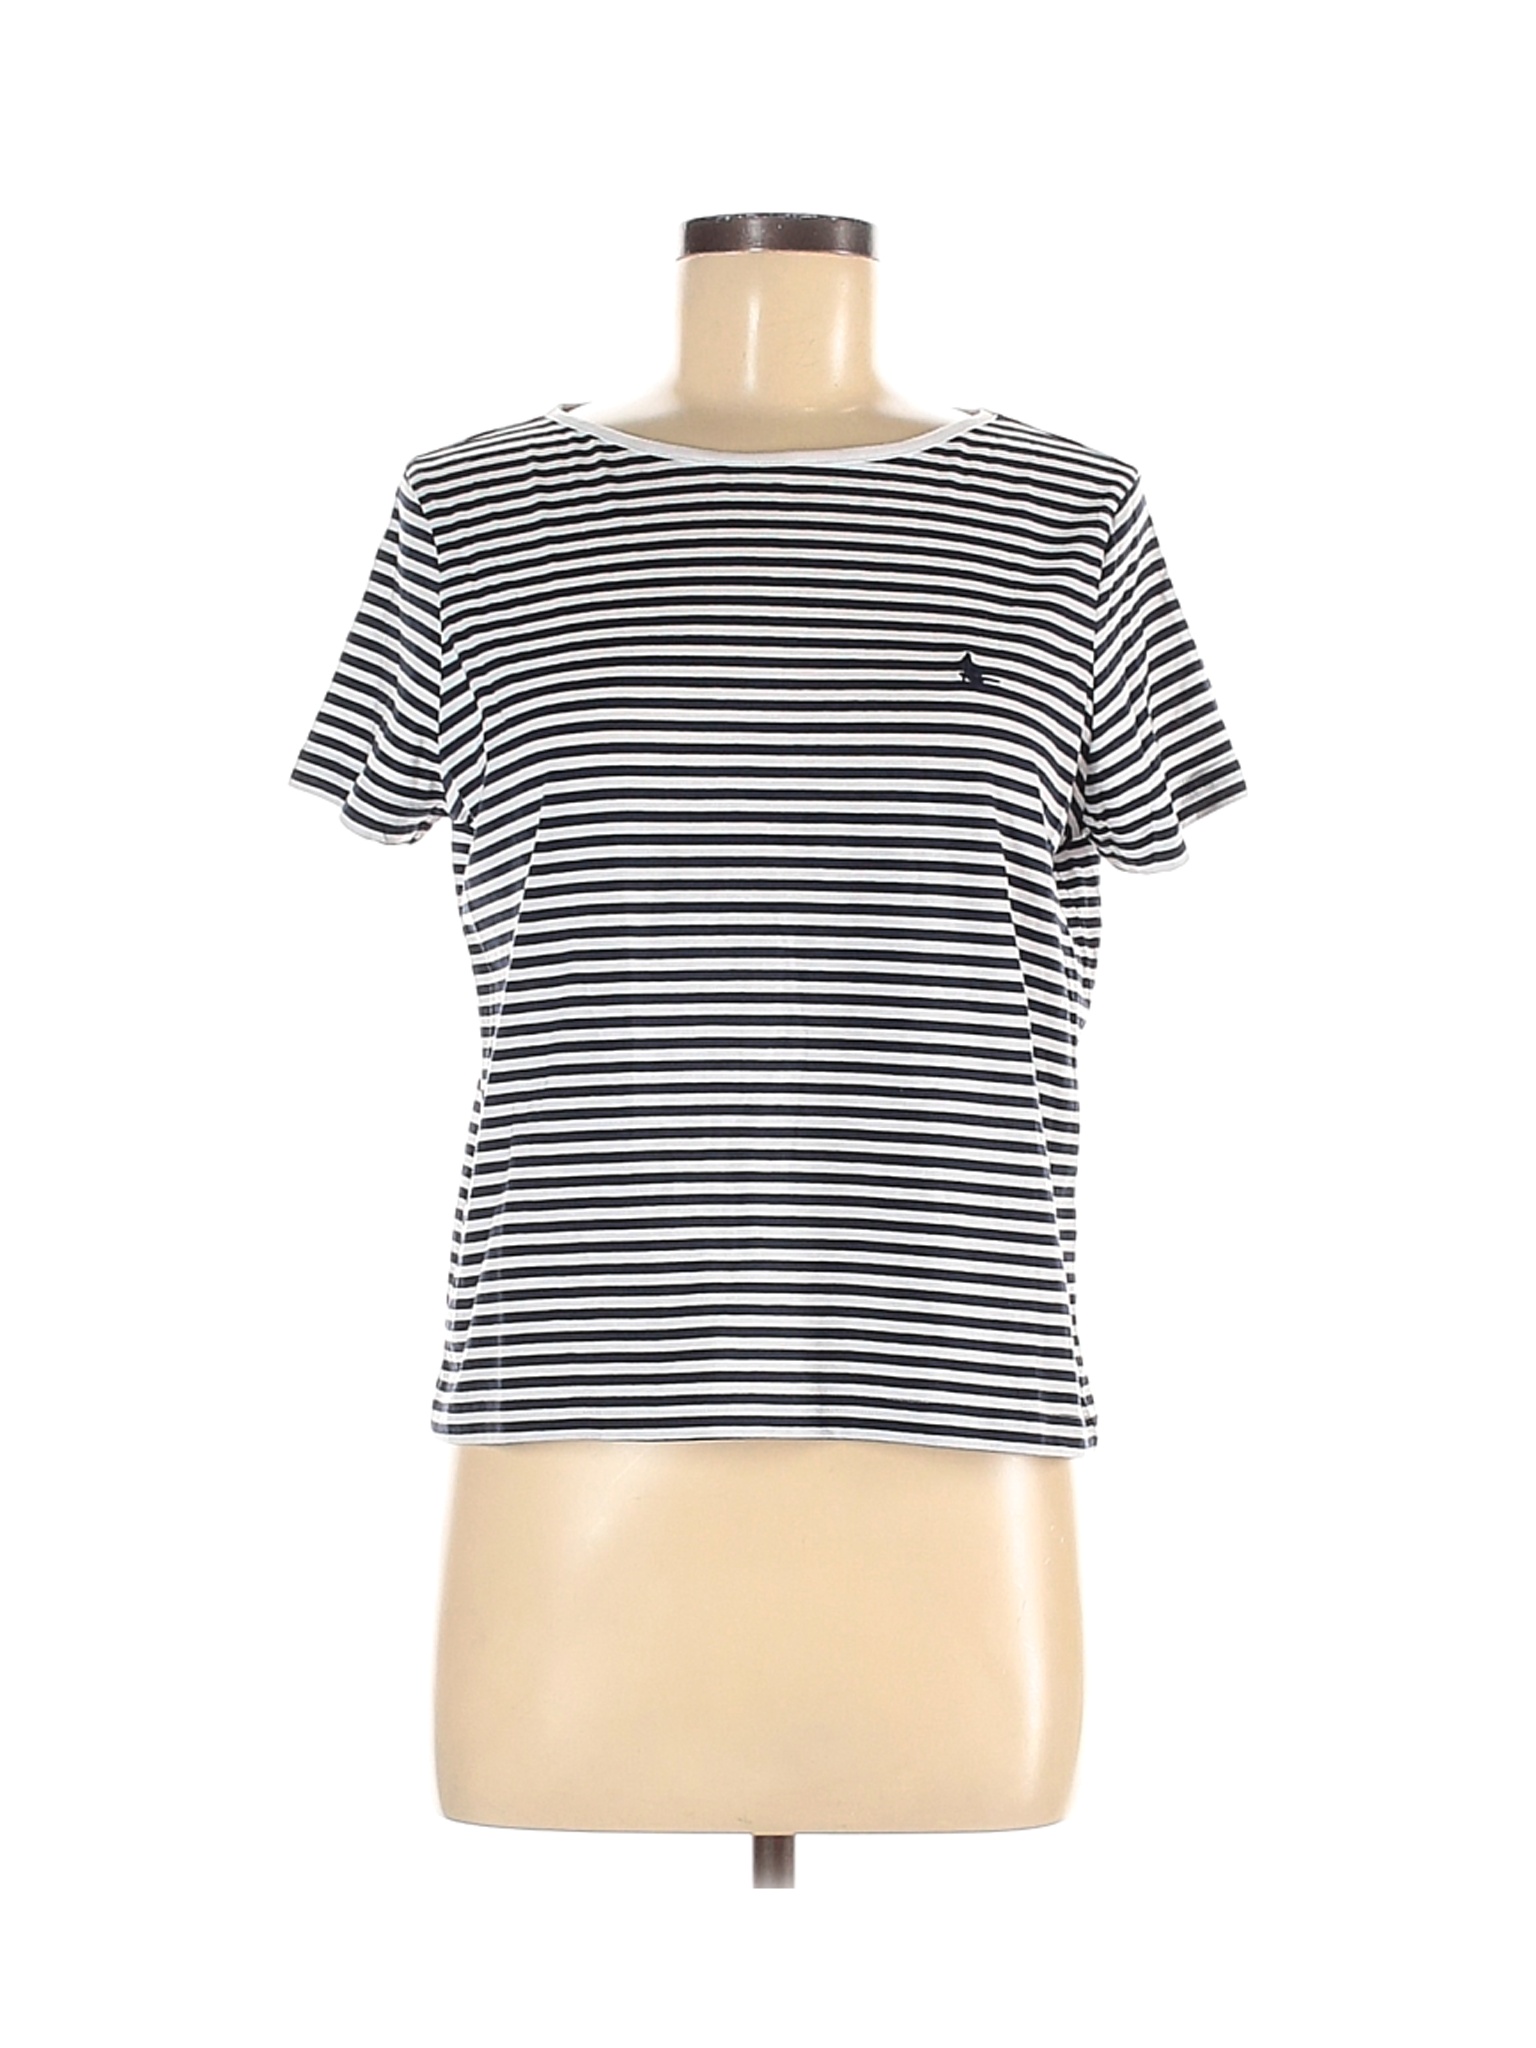 Jack Wills Women Blue Short Sleeve T-Shirt 8 | eBay